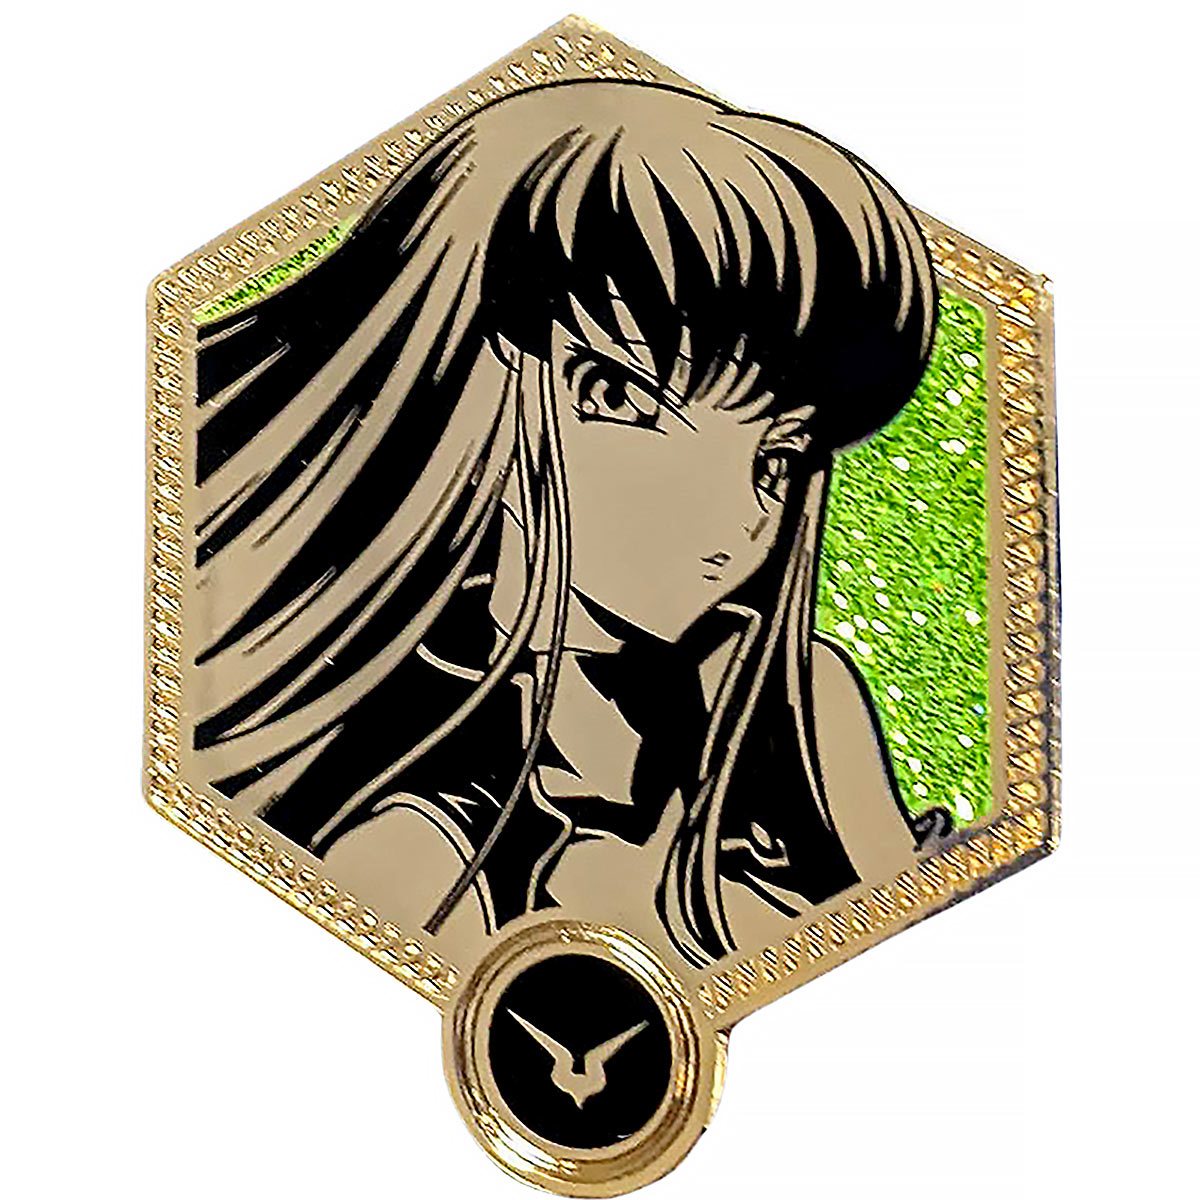 Code Geass Lelouch Limited Edition 2 Gold Enamel Pin Emblem